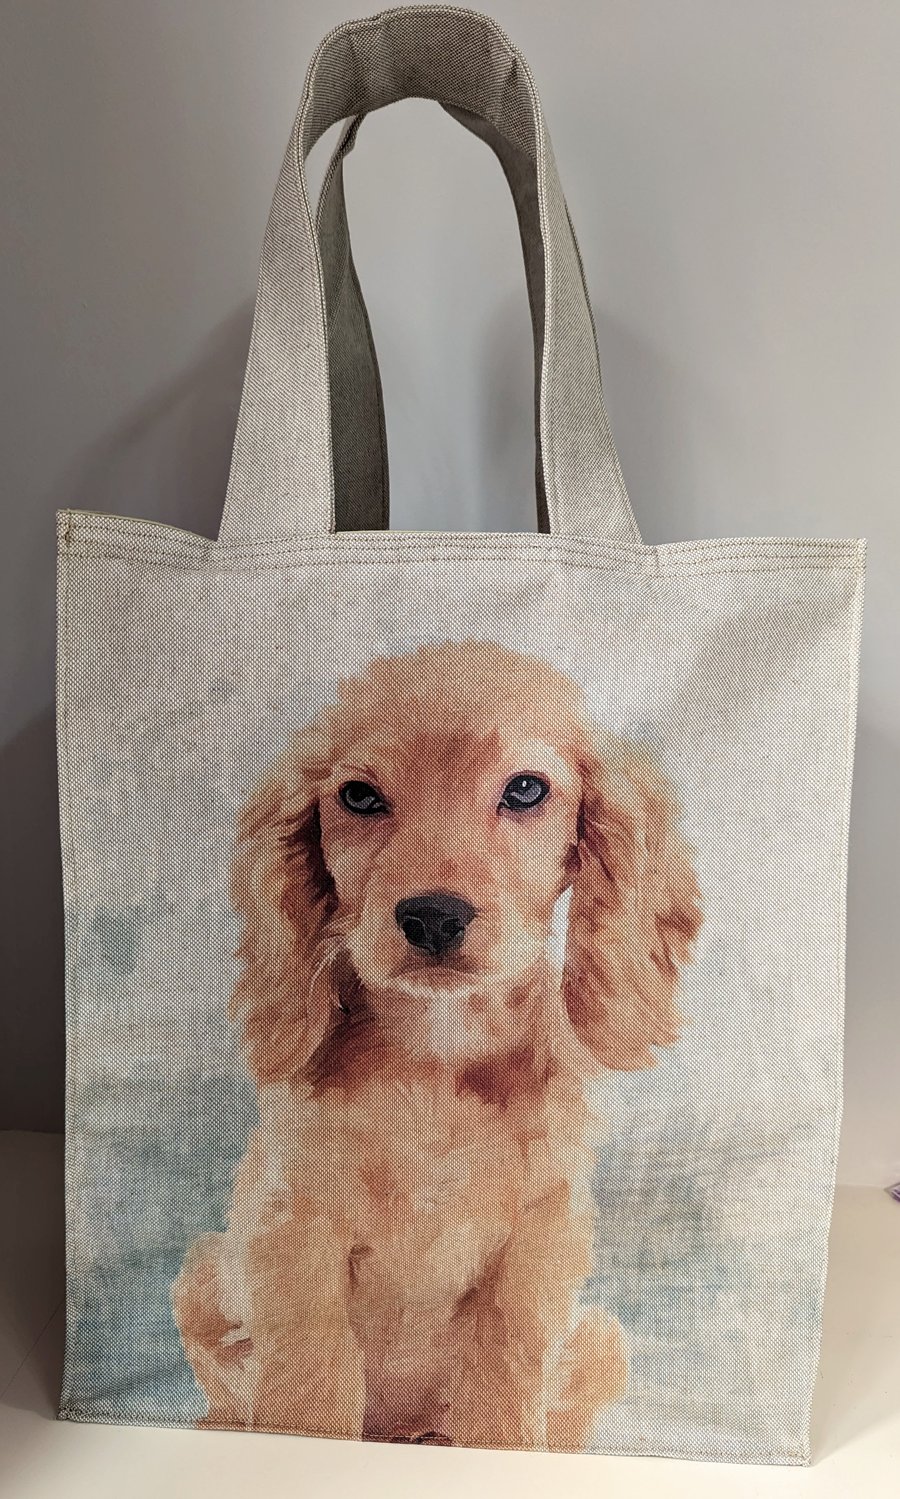 Shopping tote bag in Cocker Spaniel fabric